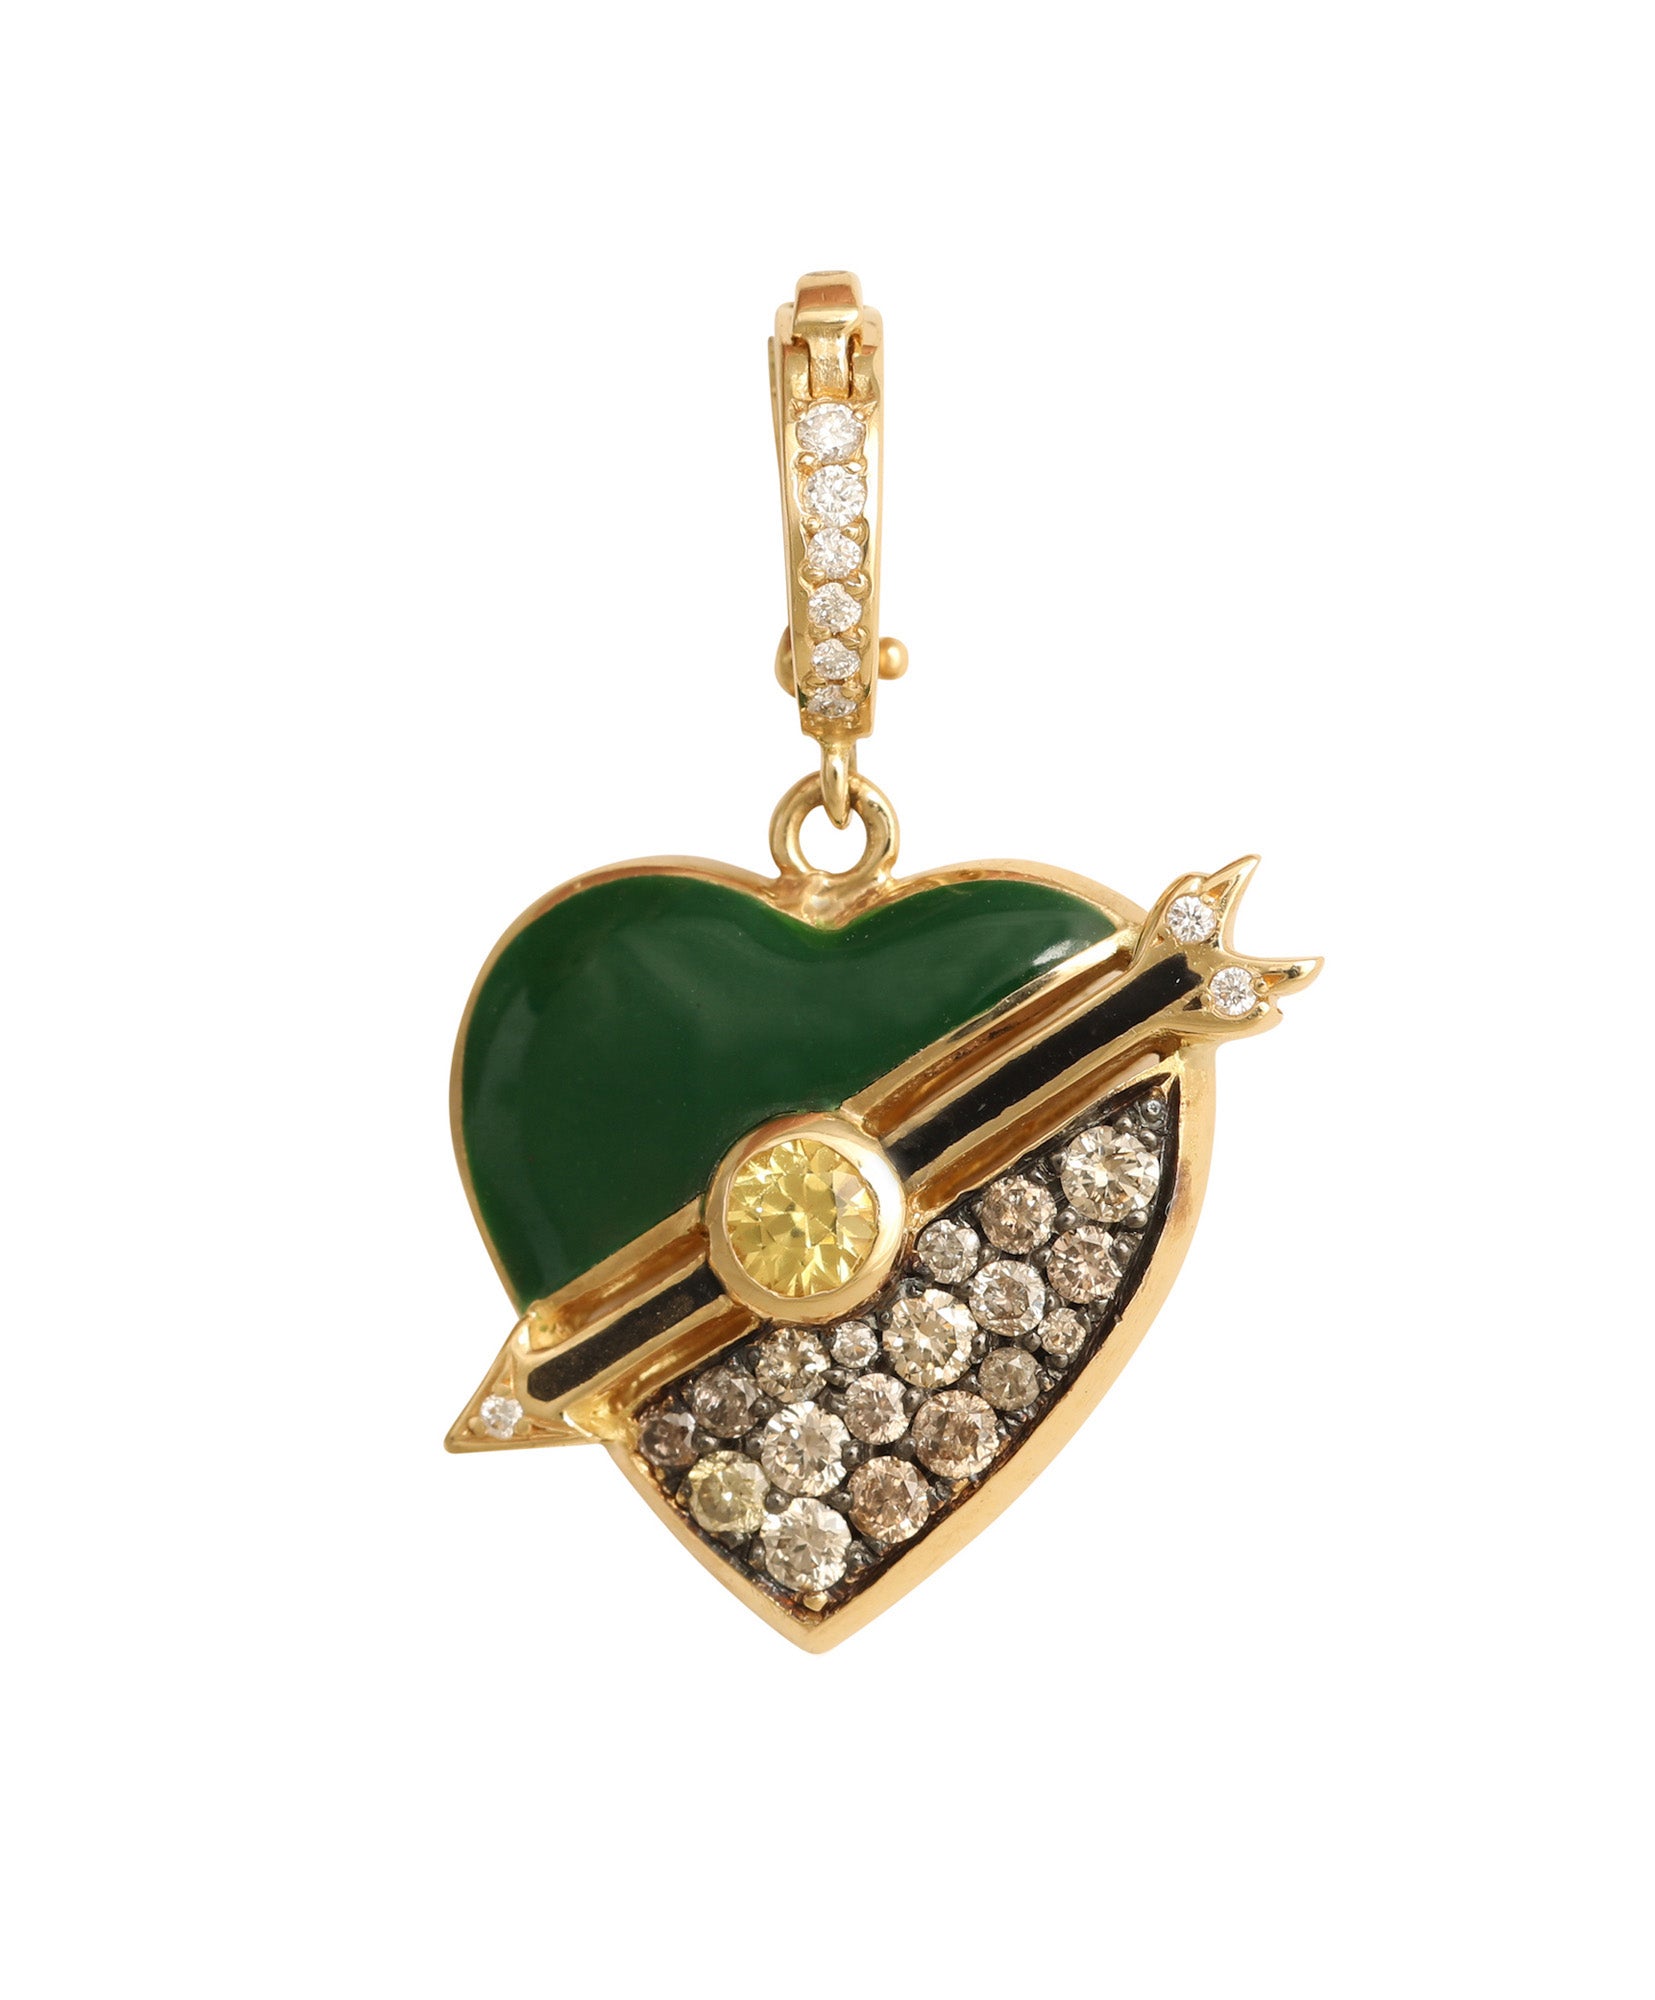  J by boghossian, white diamonds, gold, charm, pendant, heart, brown diamond, green enamel